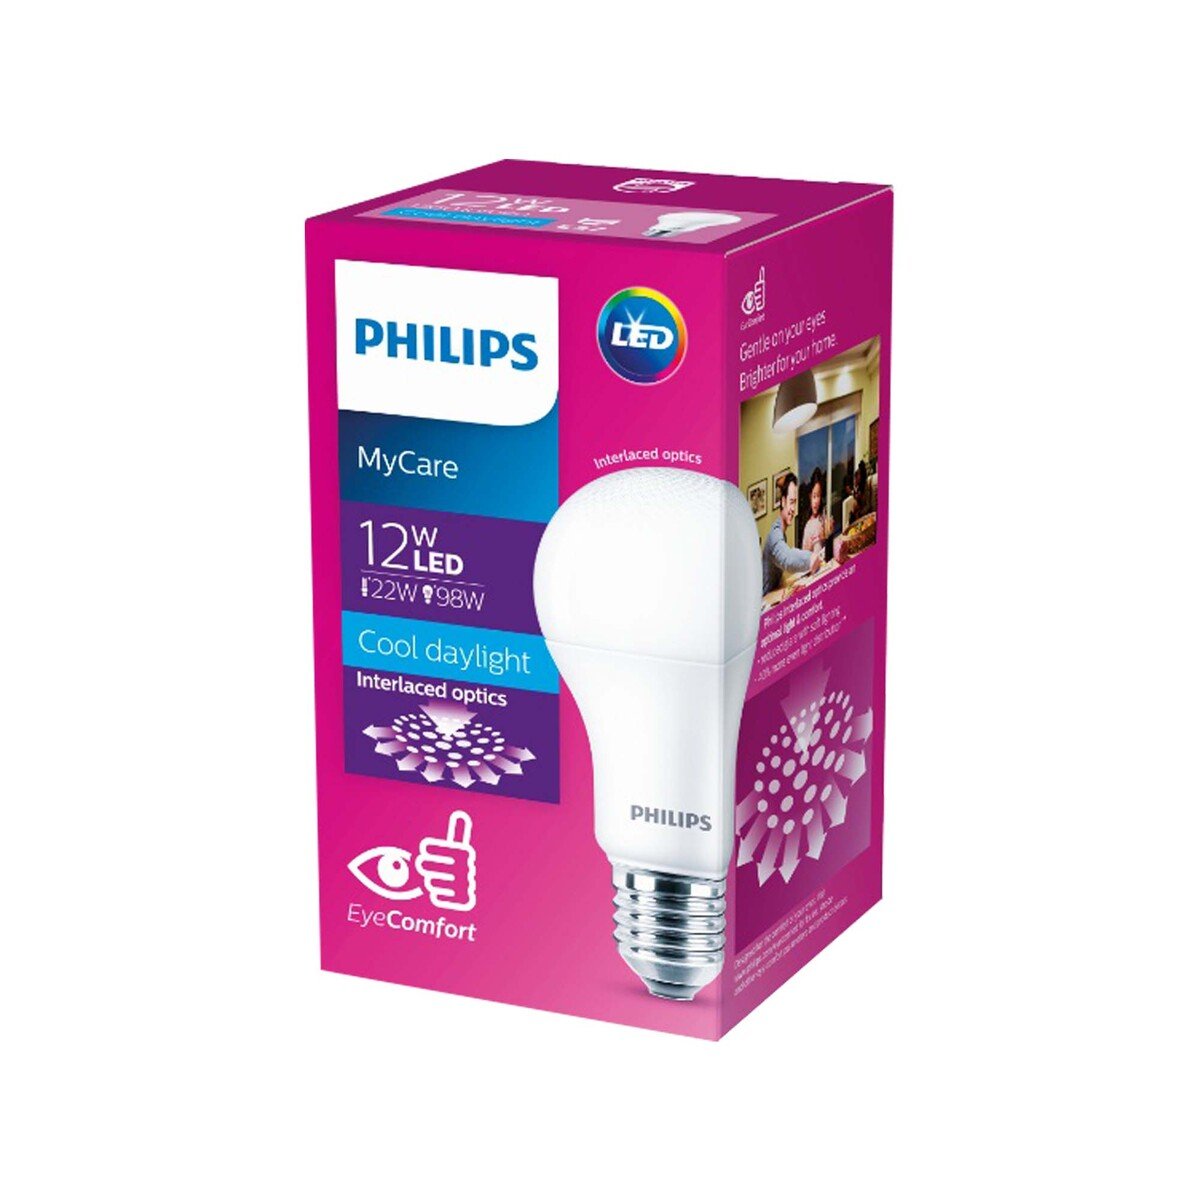 Philips Eye Comfort LED Bulb 12W E27 Cool Daylight